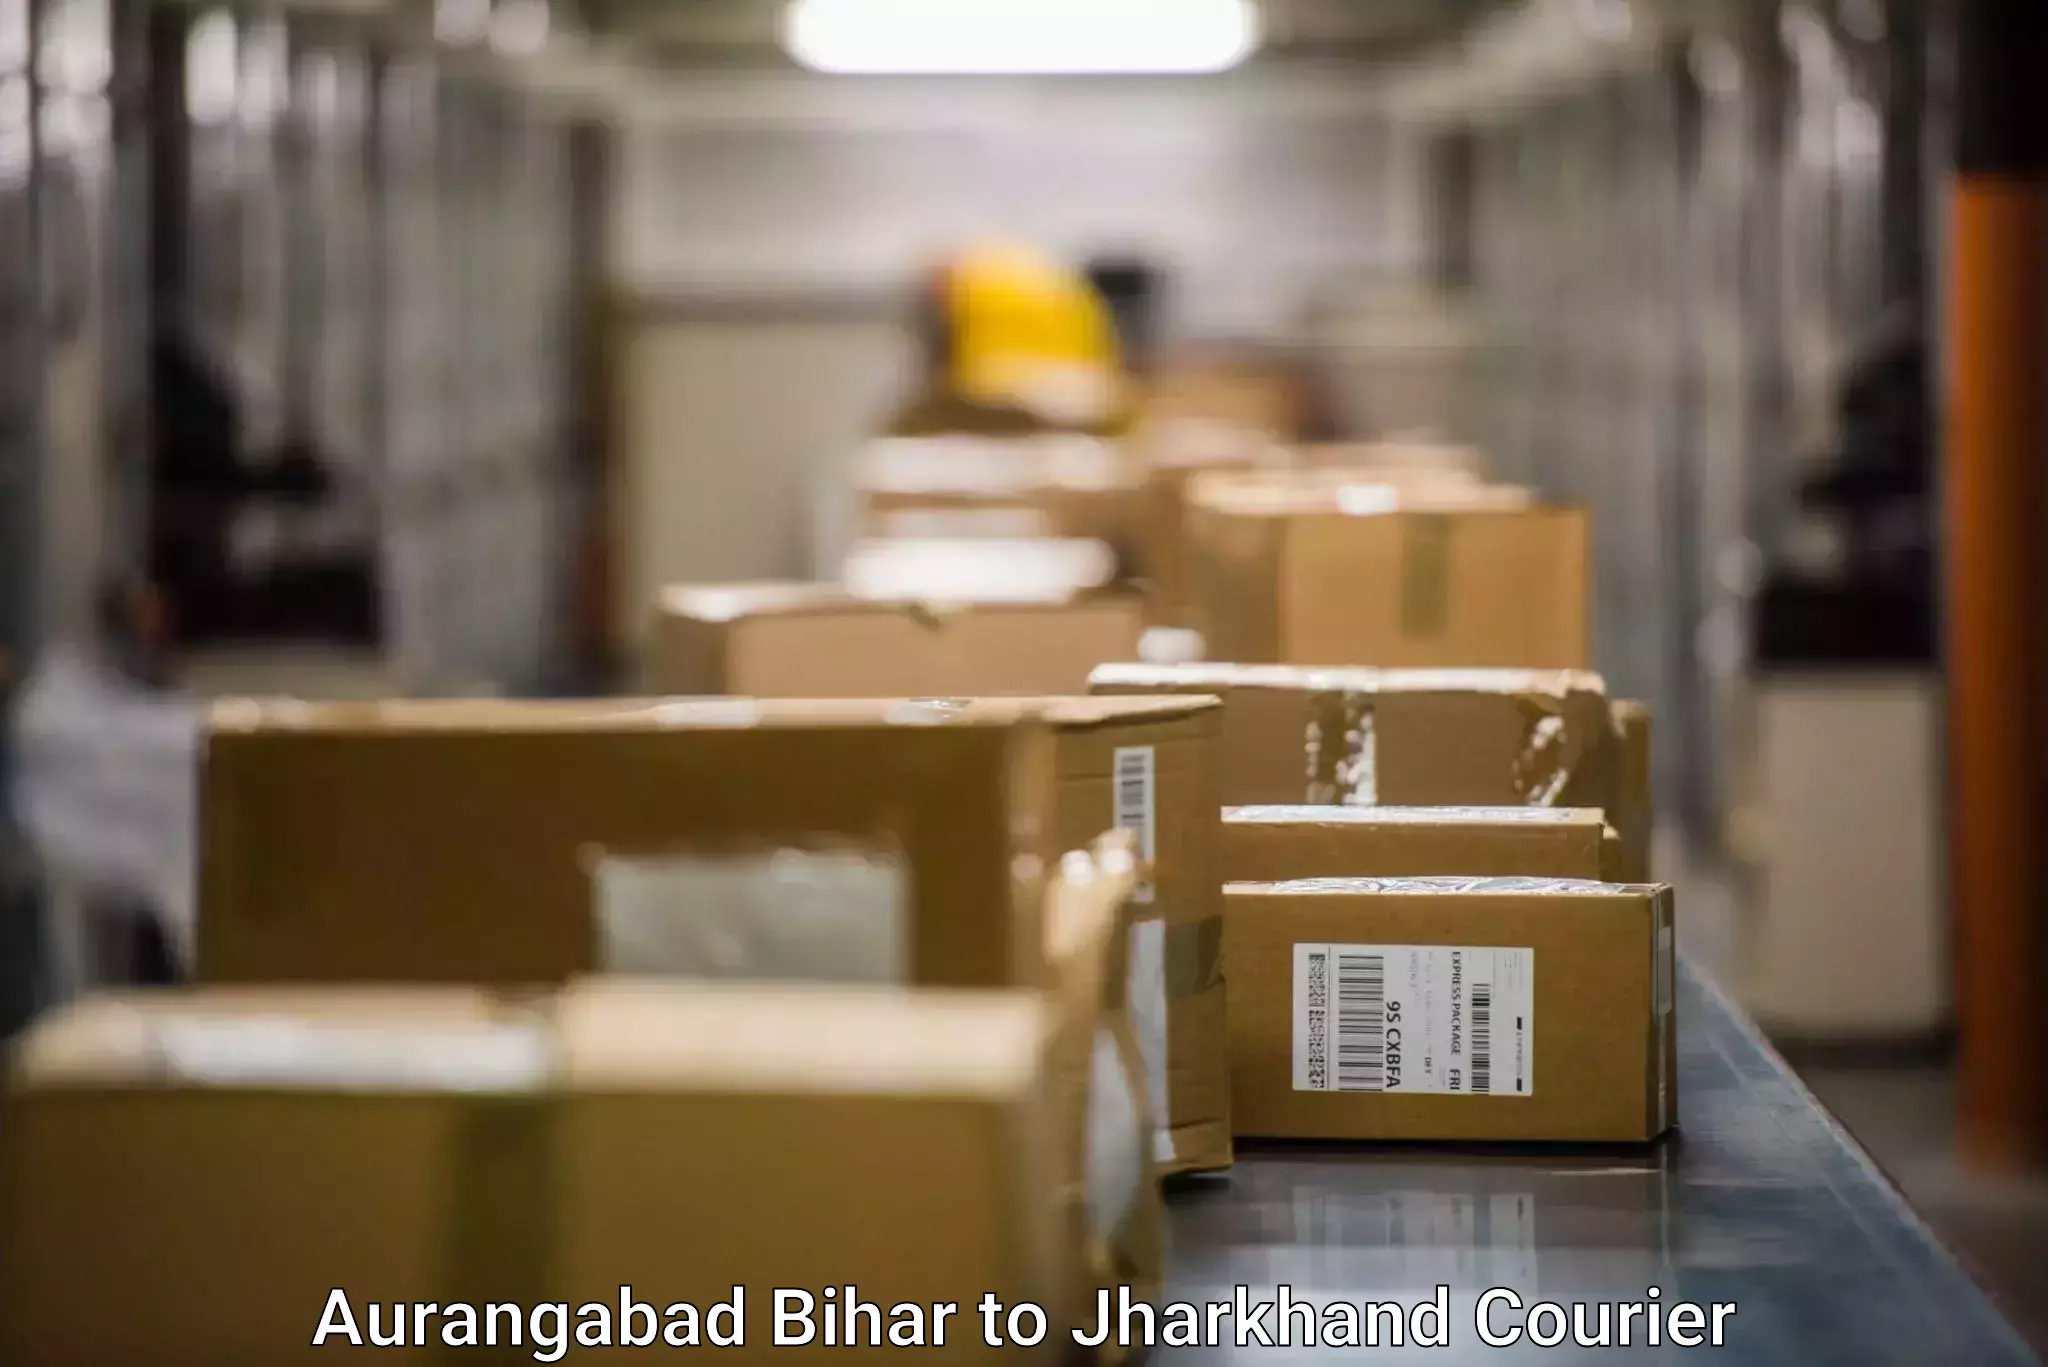 Global shipping networks Aurangabad Bihar to Nirsa